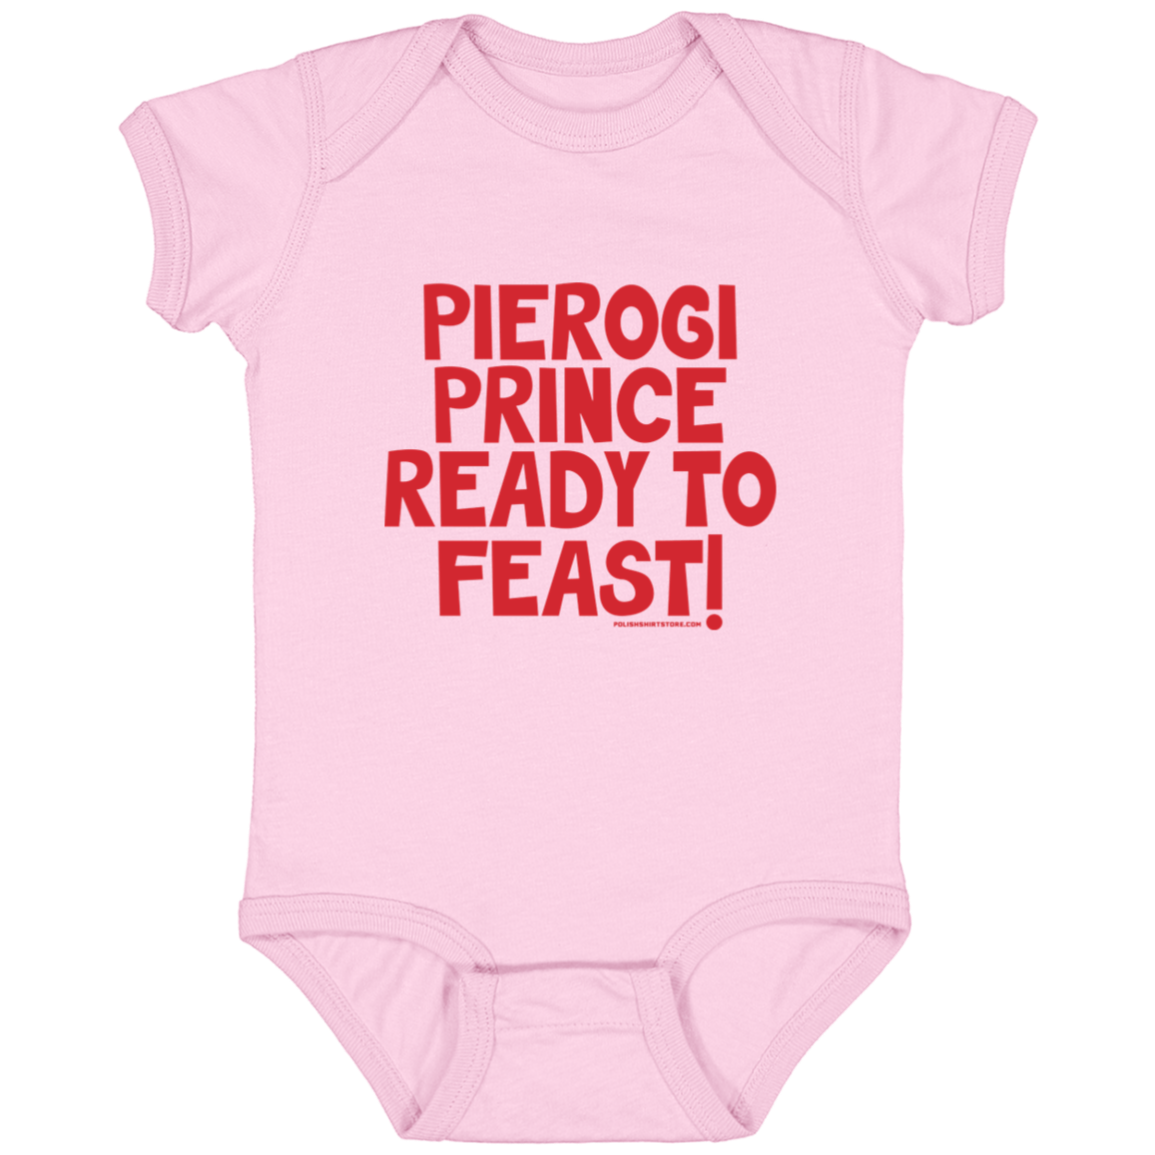 Pierogi Prince Ready To Feast Infant Bodysuit Baby CustomCat Pink Newborn 